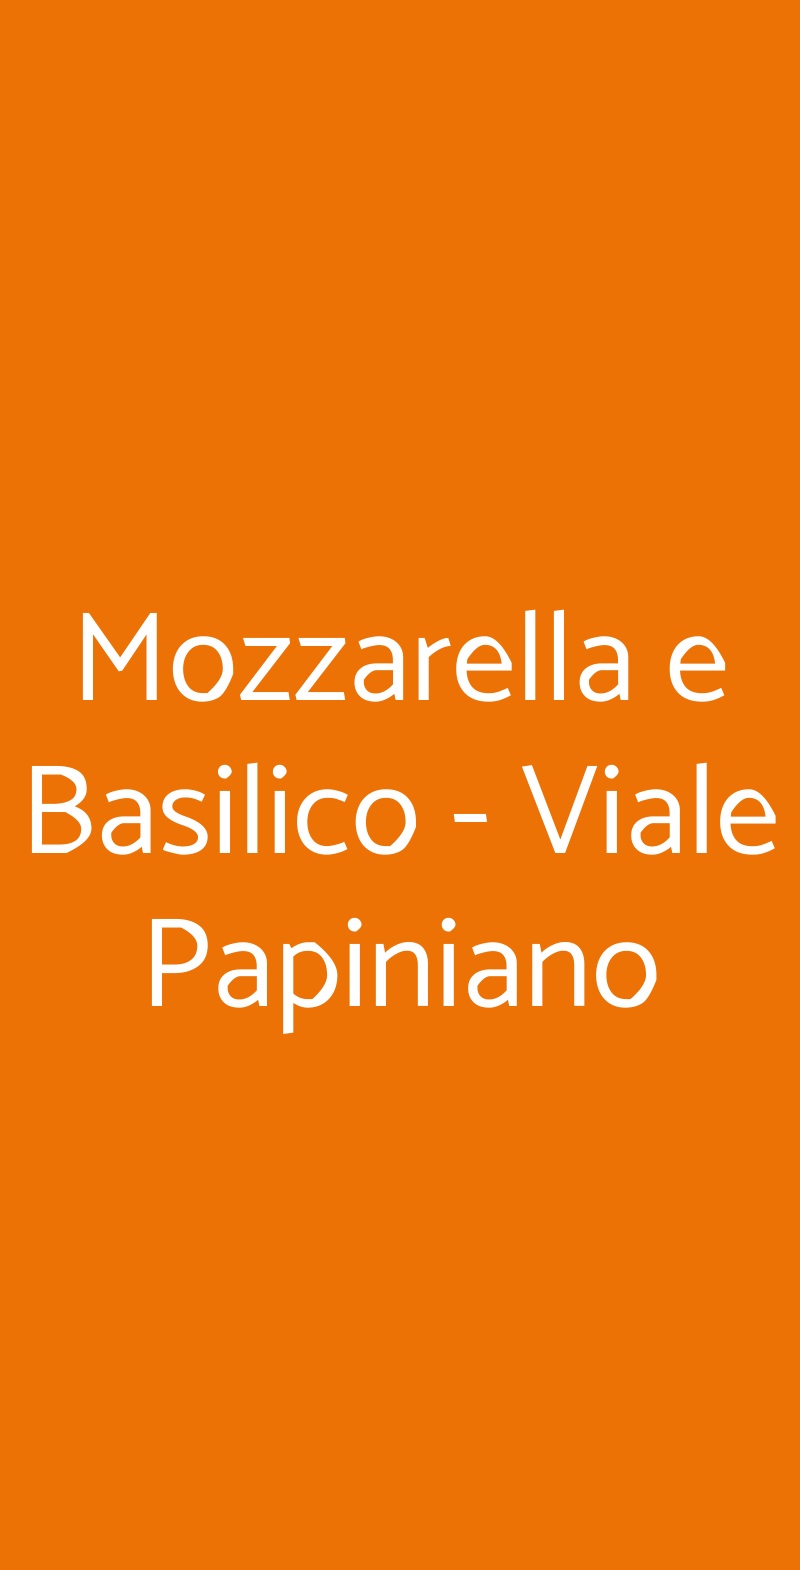 Mozzarella e Basilico - Viale Papiniano Milano menù 1 pagina